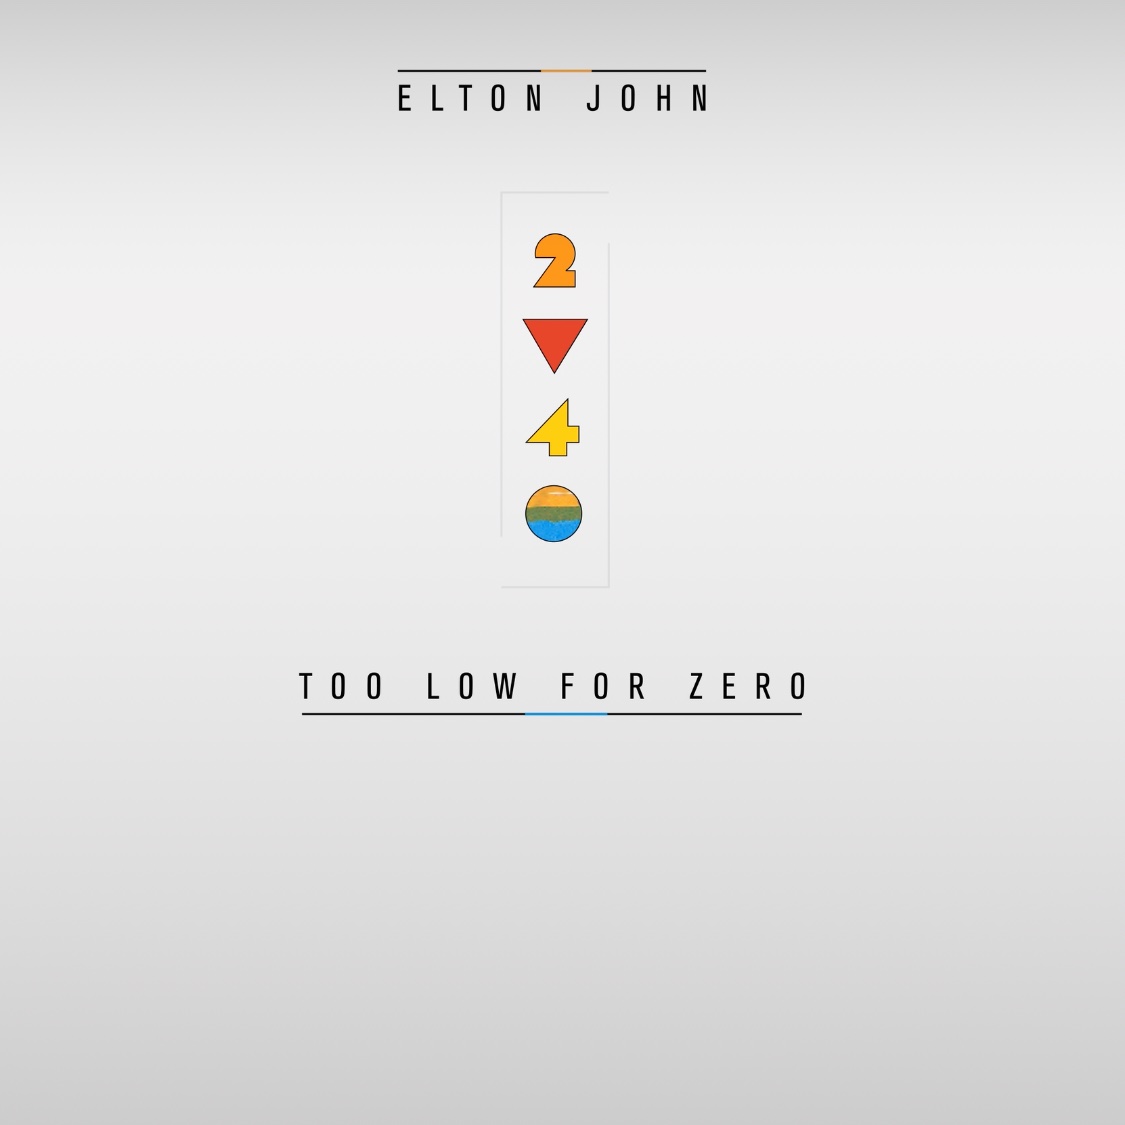 Elton John - Too low For Zero ✌🏻🩷💕
#nowplaying #popmusic #rockmusic #80smusic #albumsyoumusthear